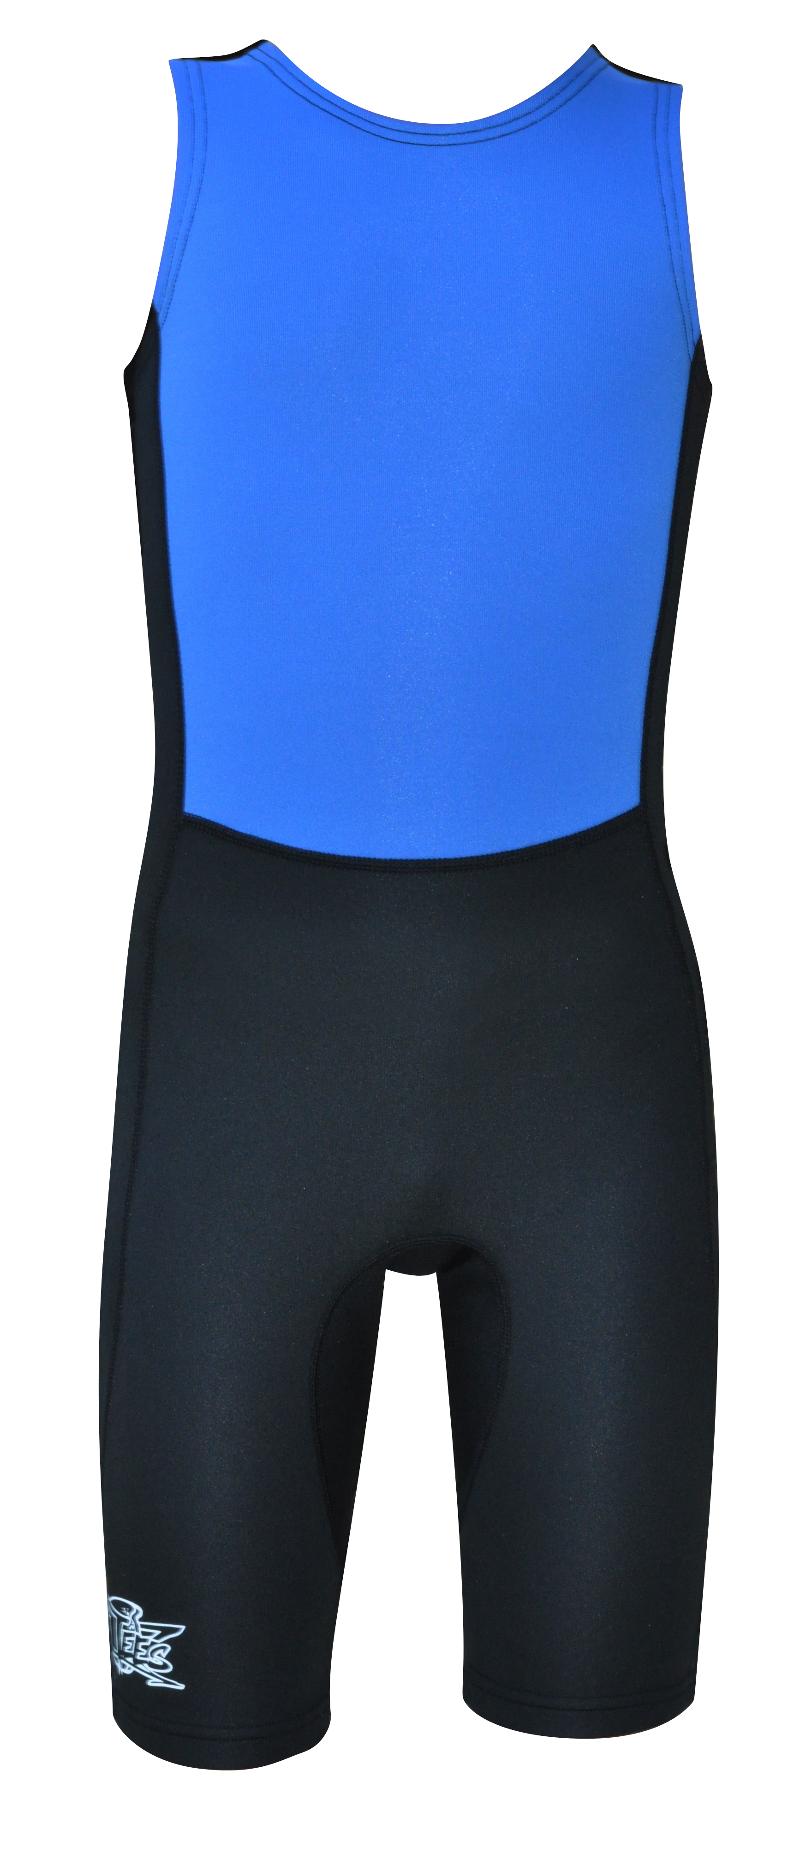 Children's Training Suit Chlorine Resistant Blue Black